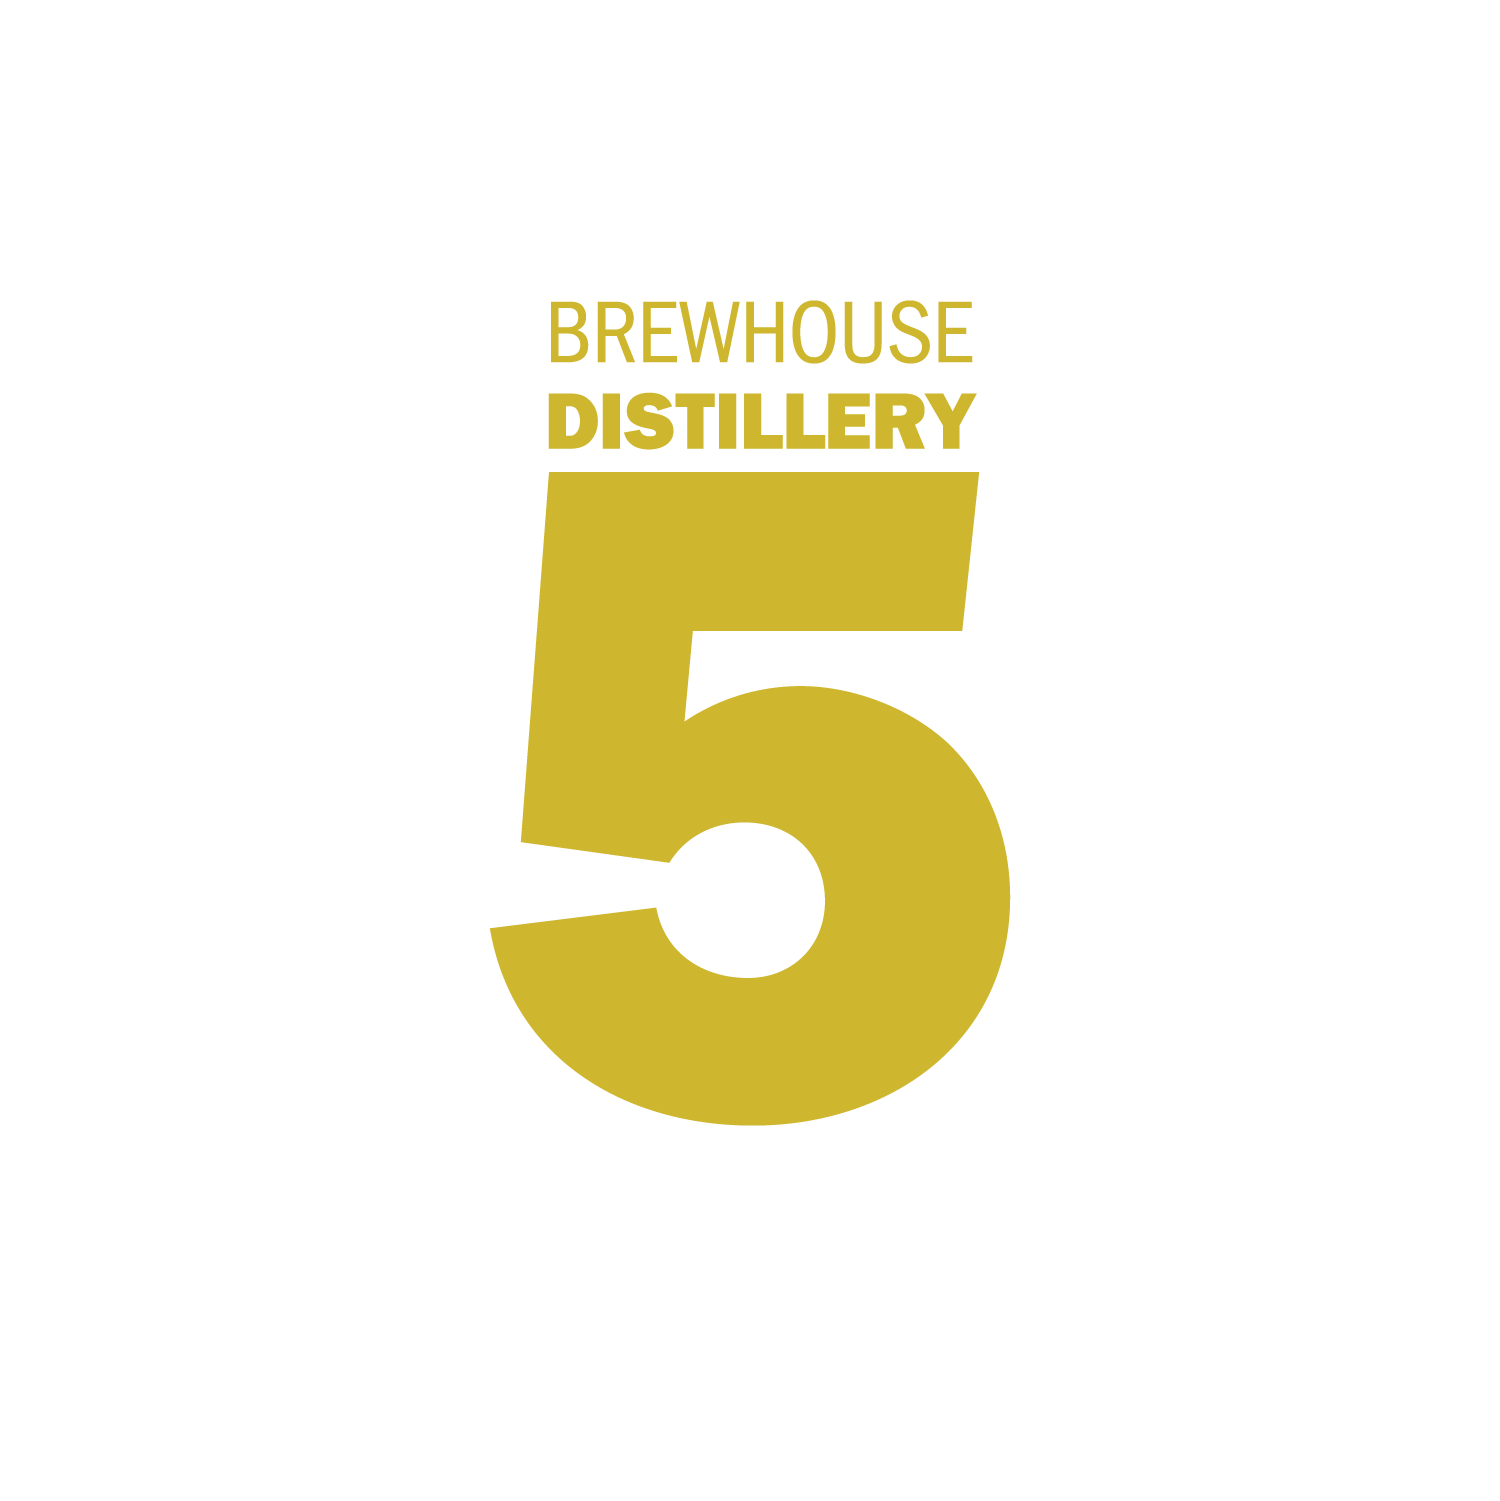 Brewhouse Distillery 5 logo by OLSON MCINTYRE